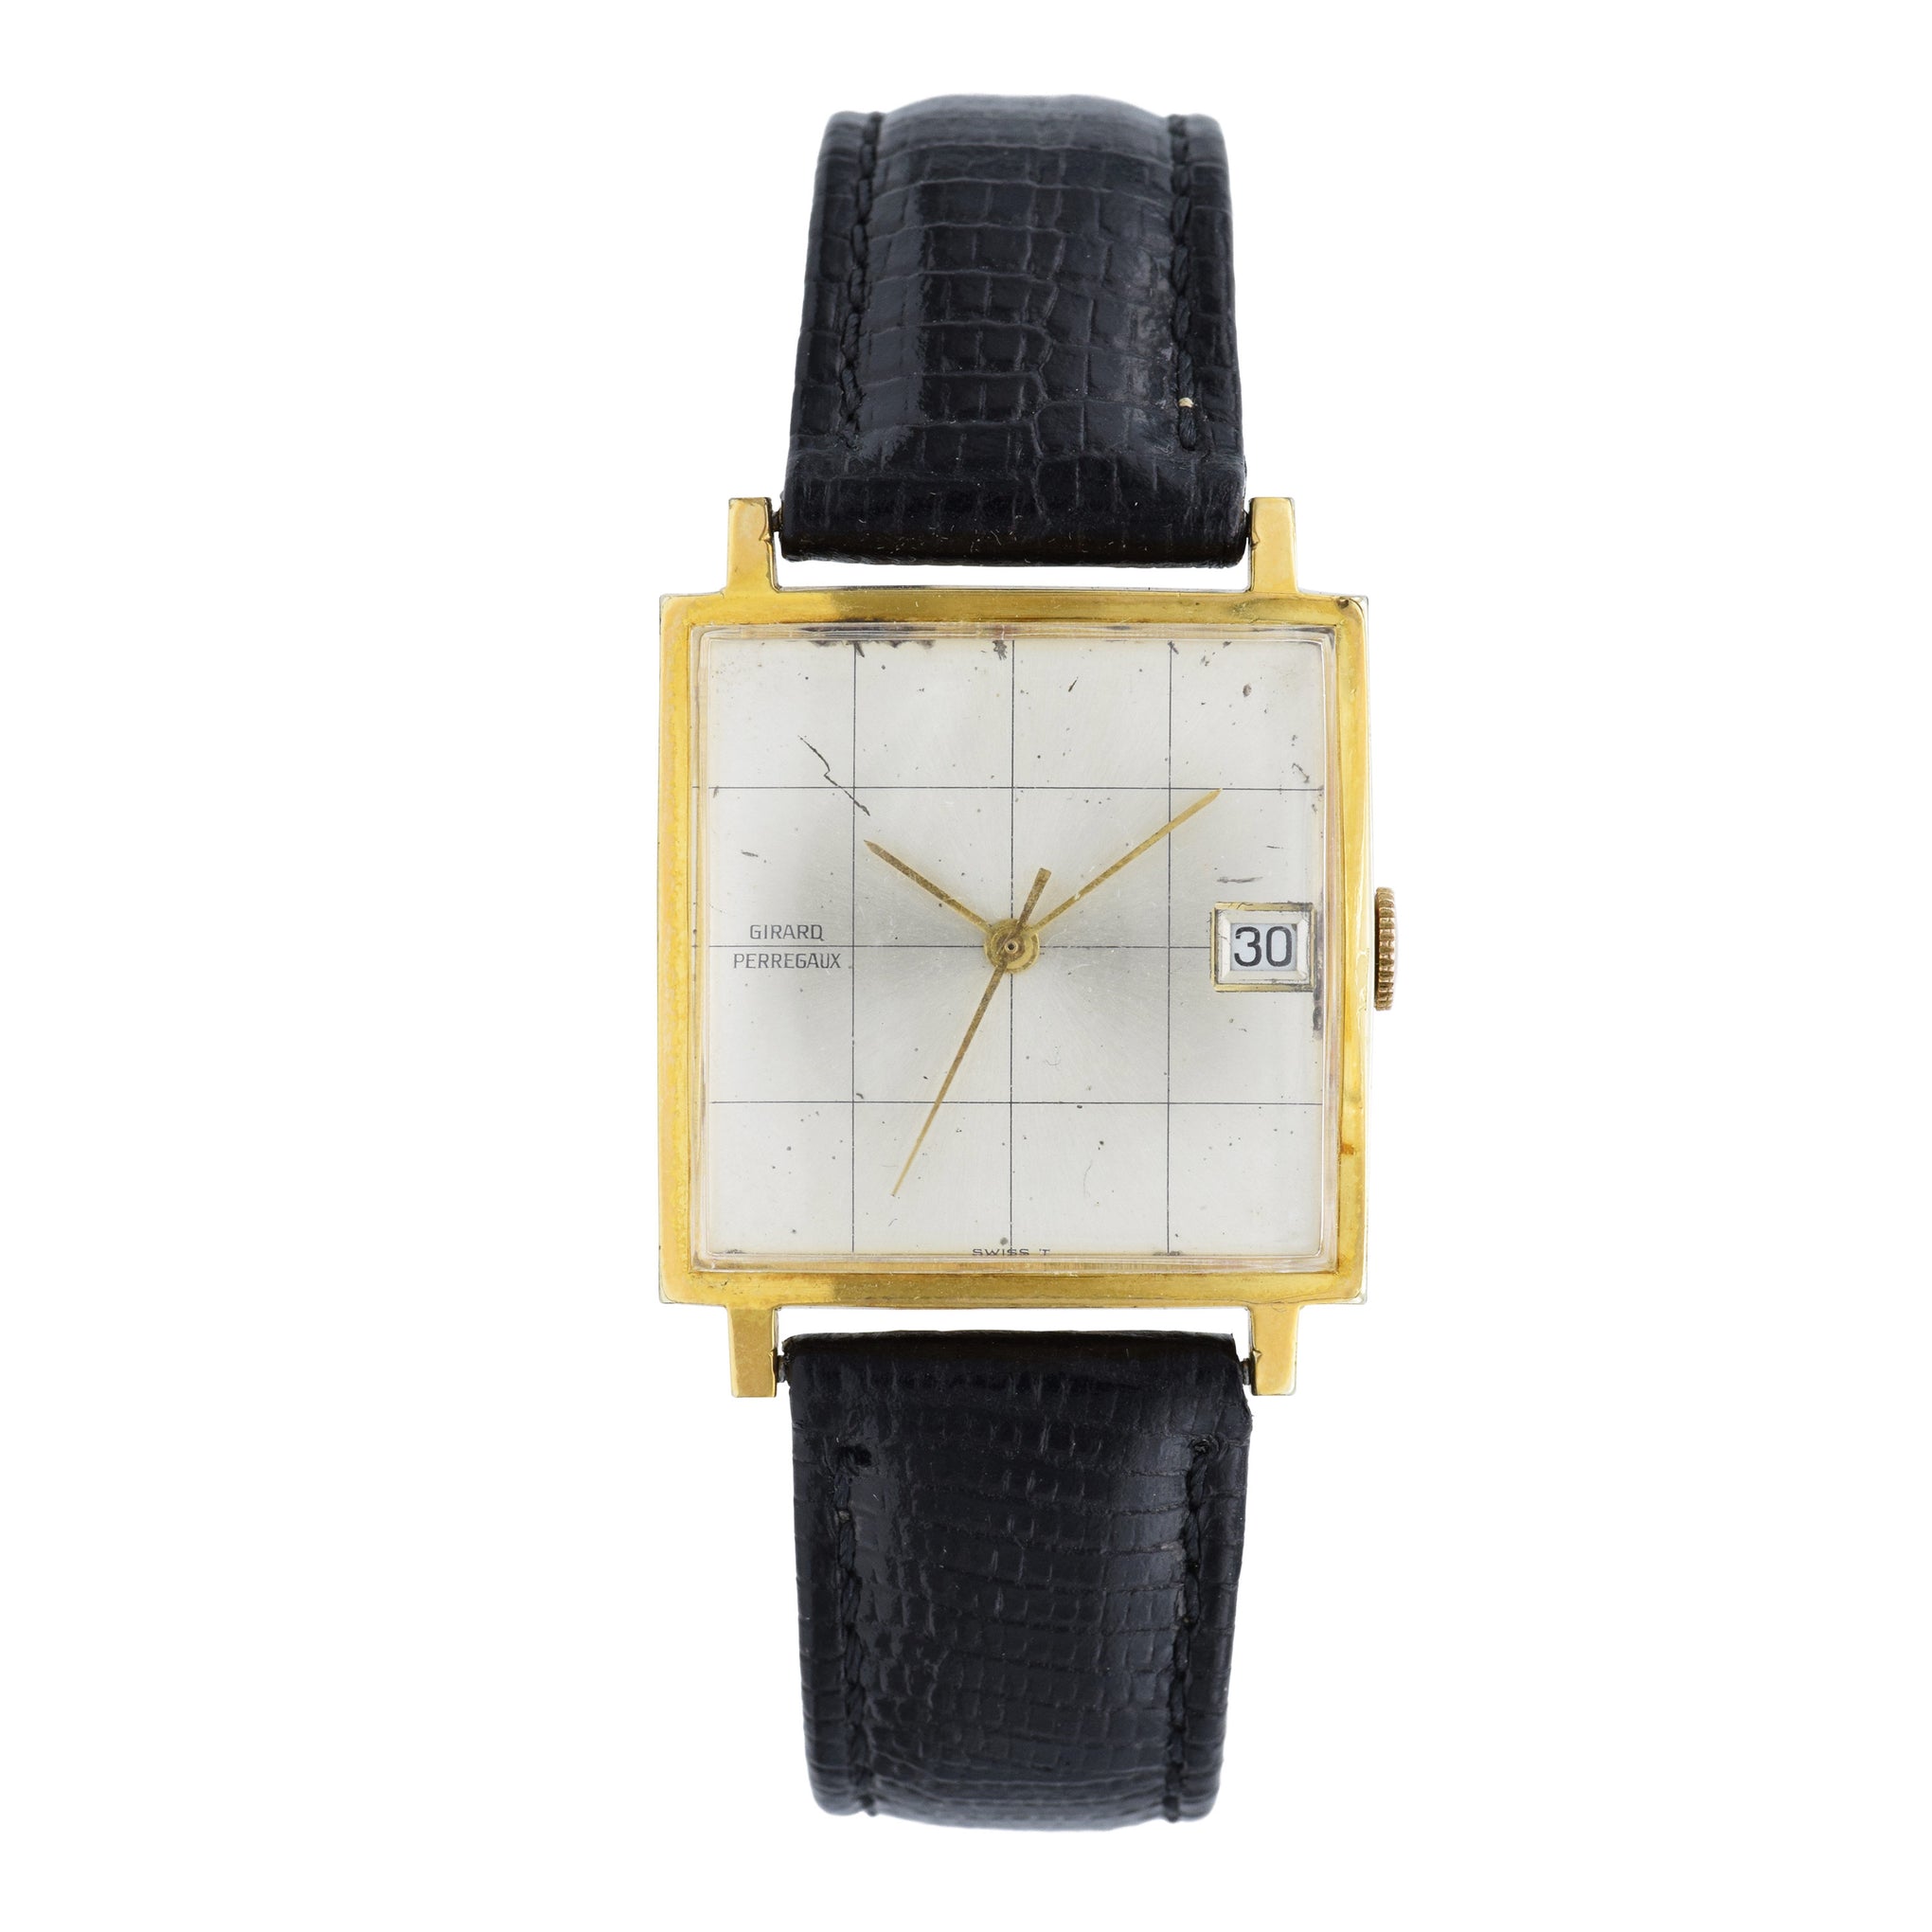 Vintage 1960s Girard-Perregaux Watch